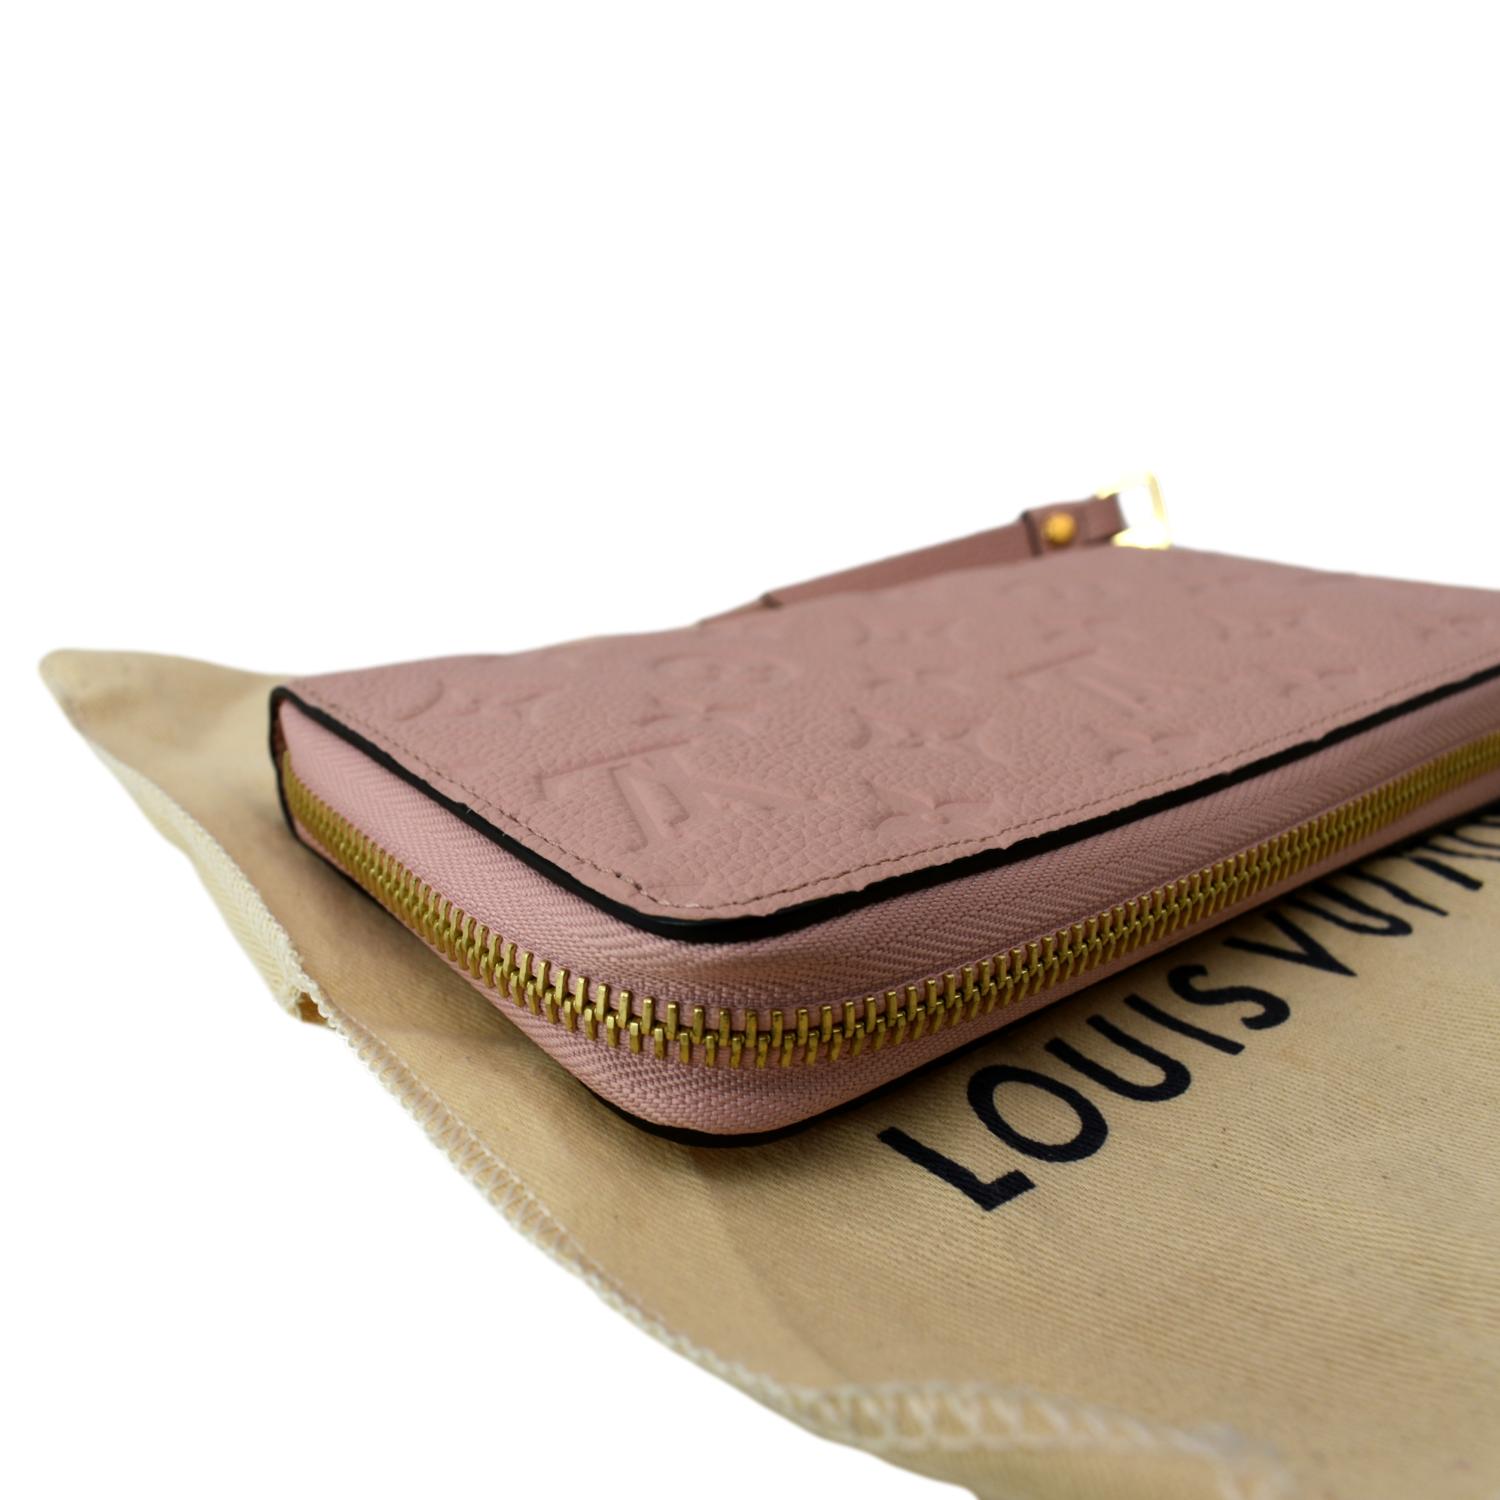 Louis Vuitton Empreinte Zoe Wallet Rose Poudre - MyDesignerly